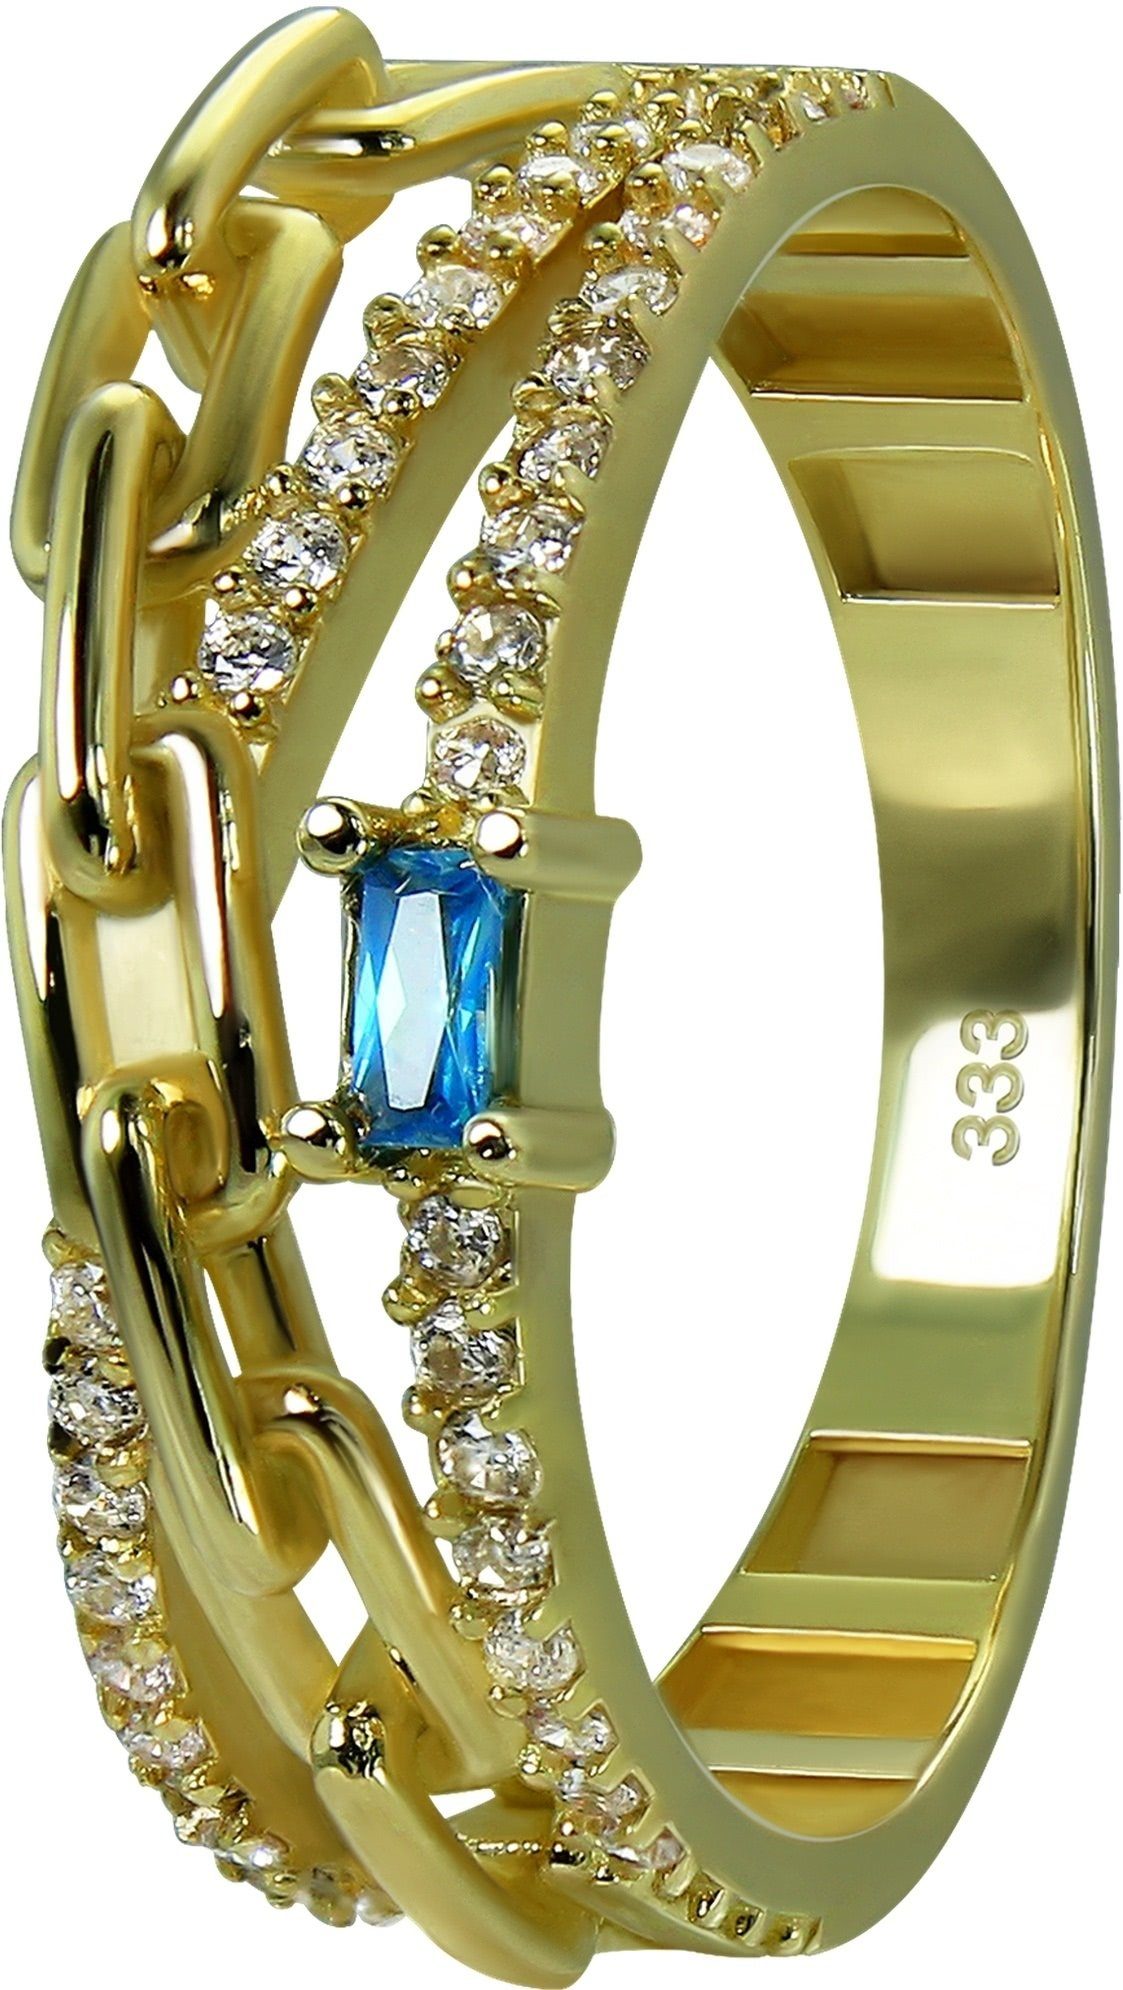 GoldDream Glamour (Fingerring), Ring gold, Gold hellblau Farbe: Gelbgold 333 Karat, weiß, Glamour Goldring - 8 Damen Ring GoldDream Gr.60